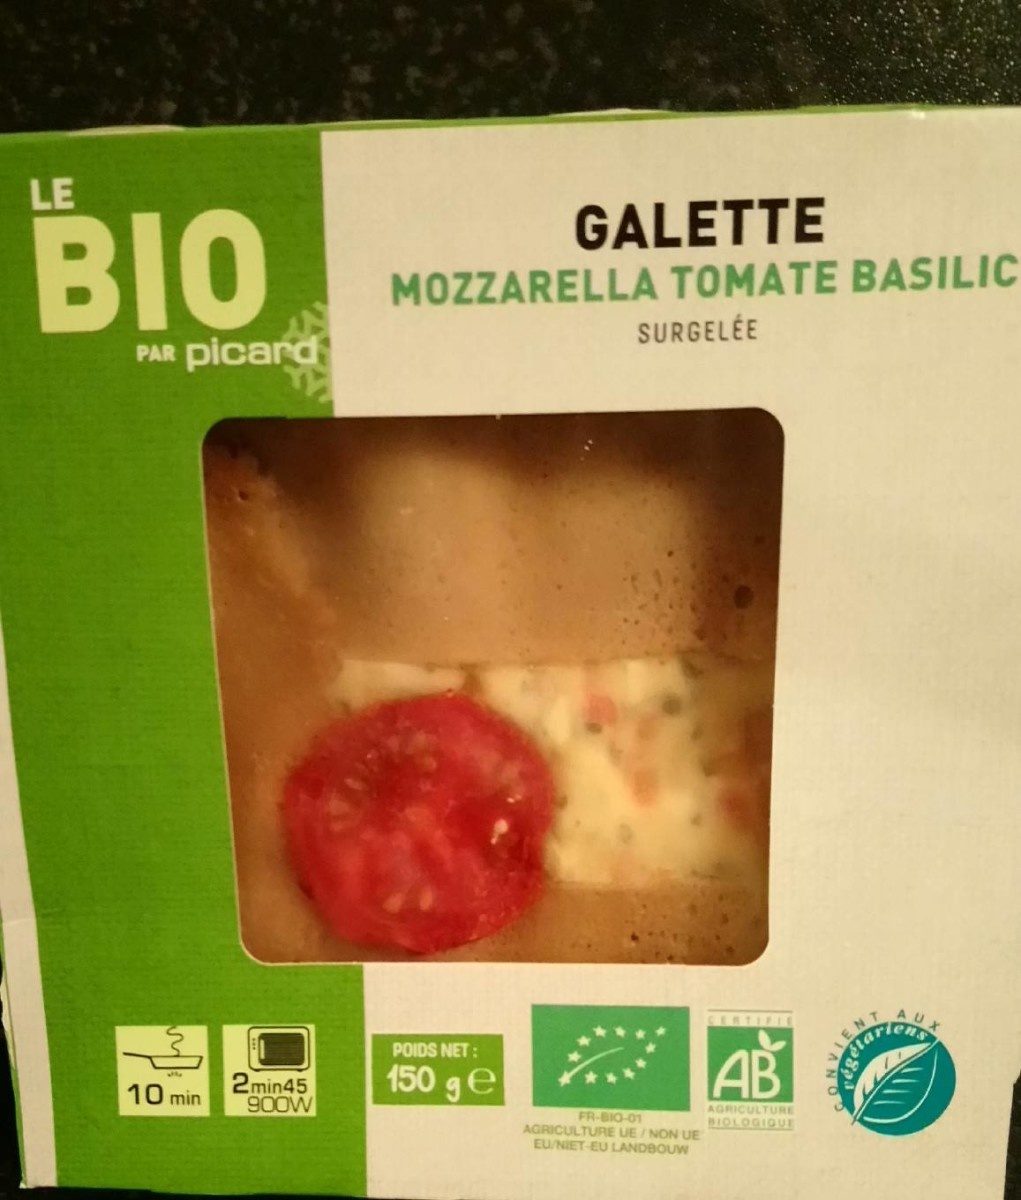 Galette mozzarella tomate basilic - Product - fr